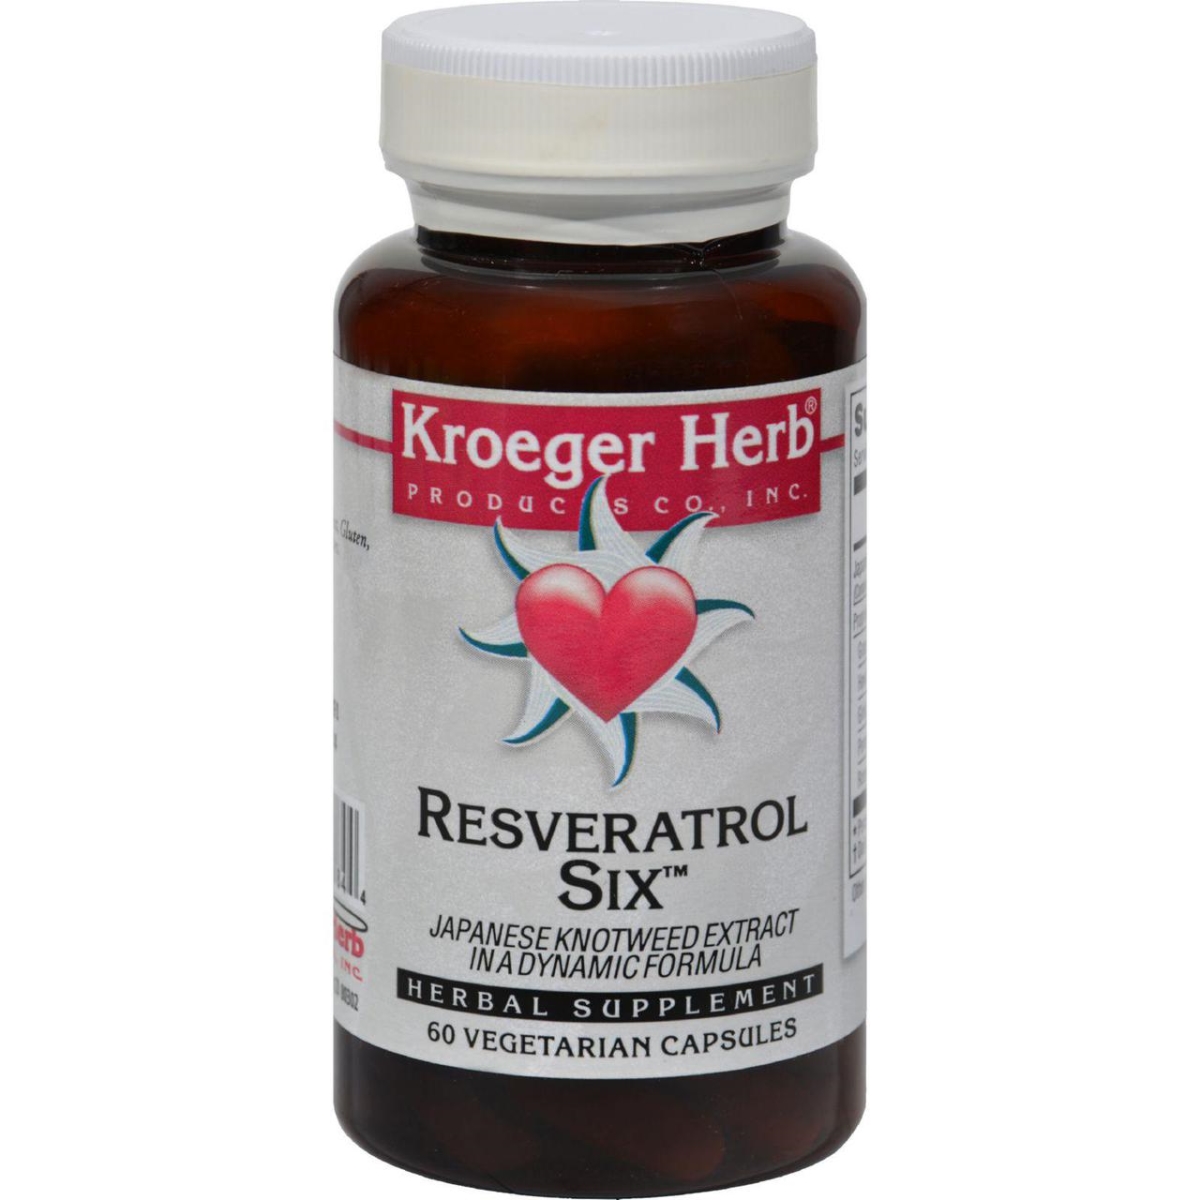 Hg1072313 Resveratrol Six - 60 Capsules